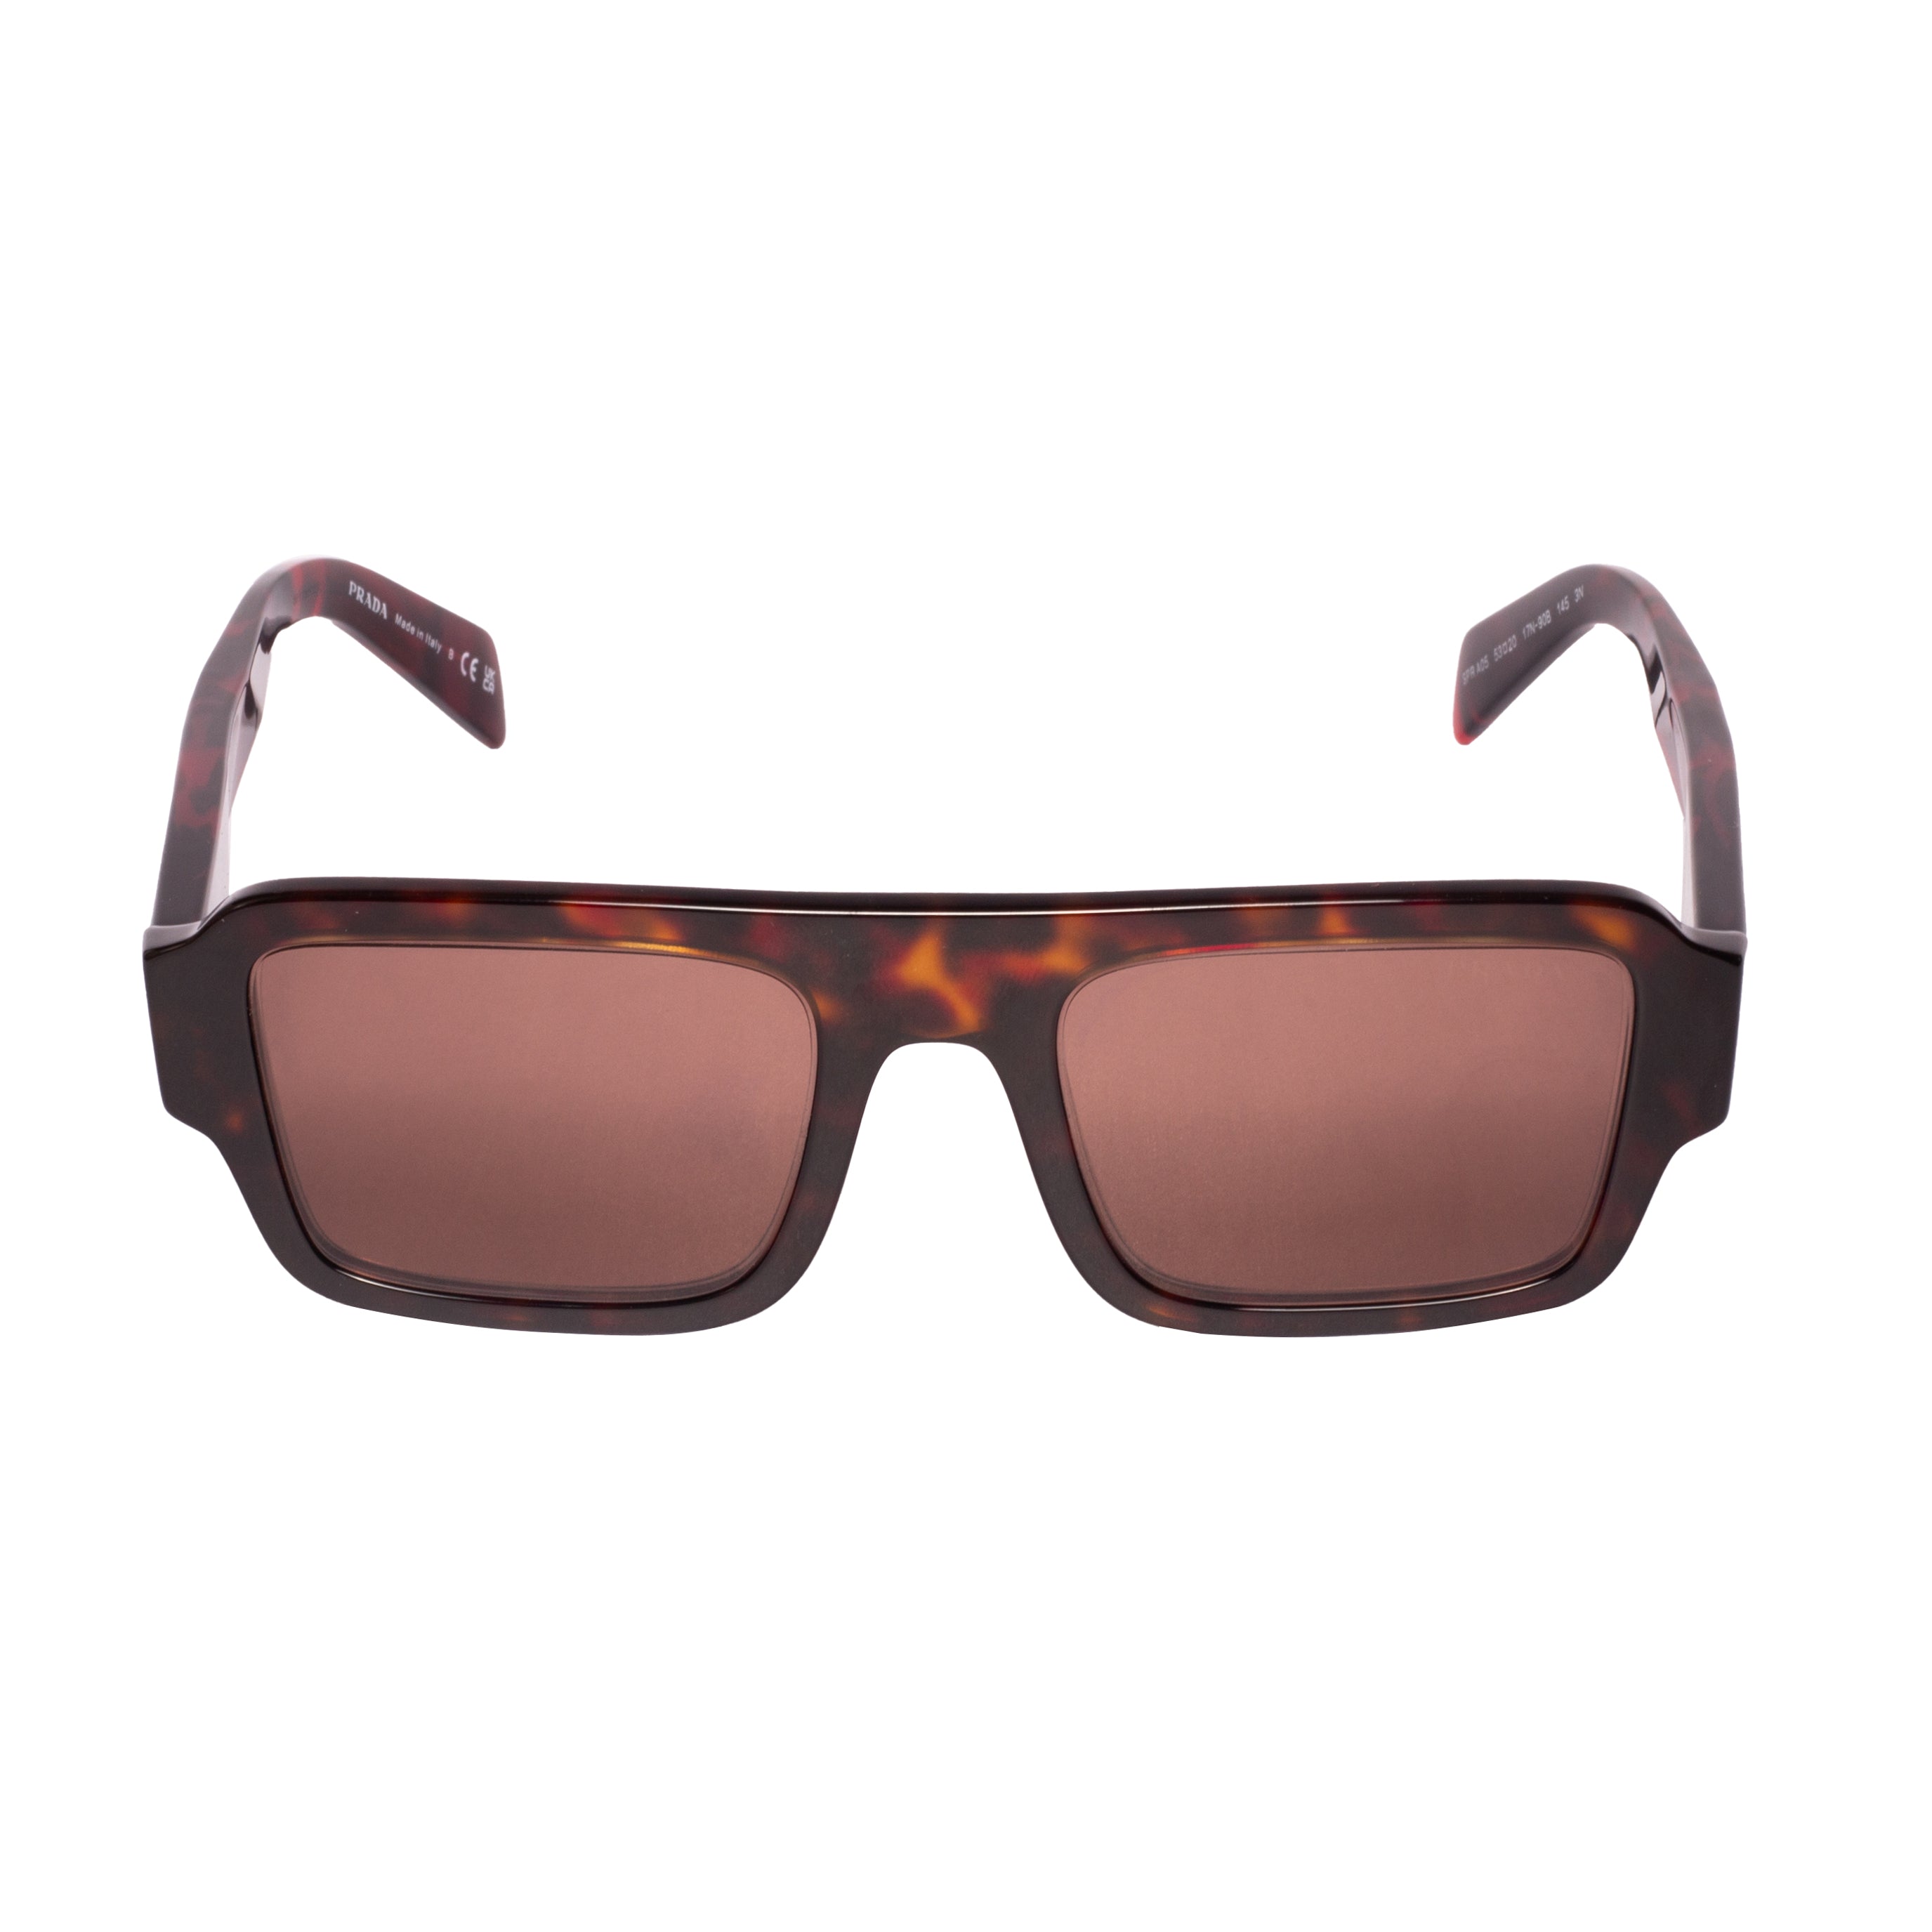 Prada-PRA05S-53-17N90B Sunglasses - Premium Sunglasses from Prada - Just Rs. 34090! Shop now at Laxmi Opticians